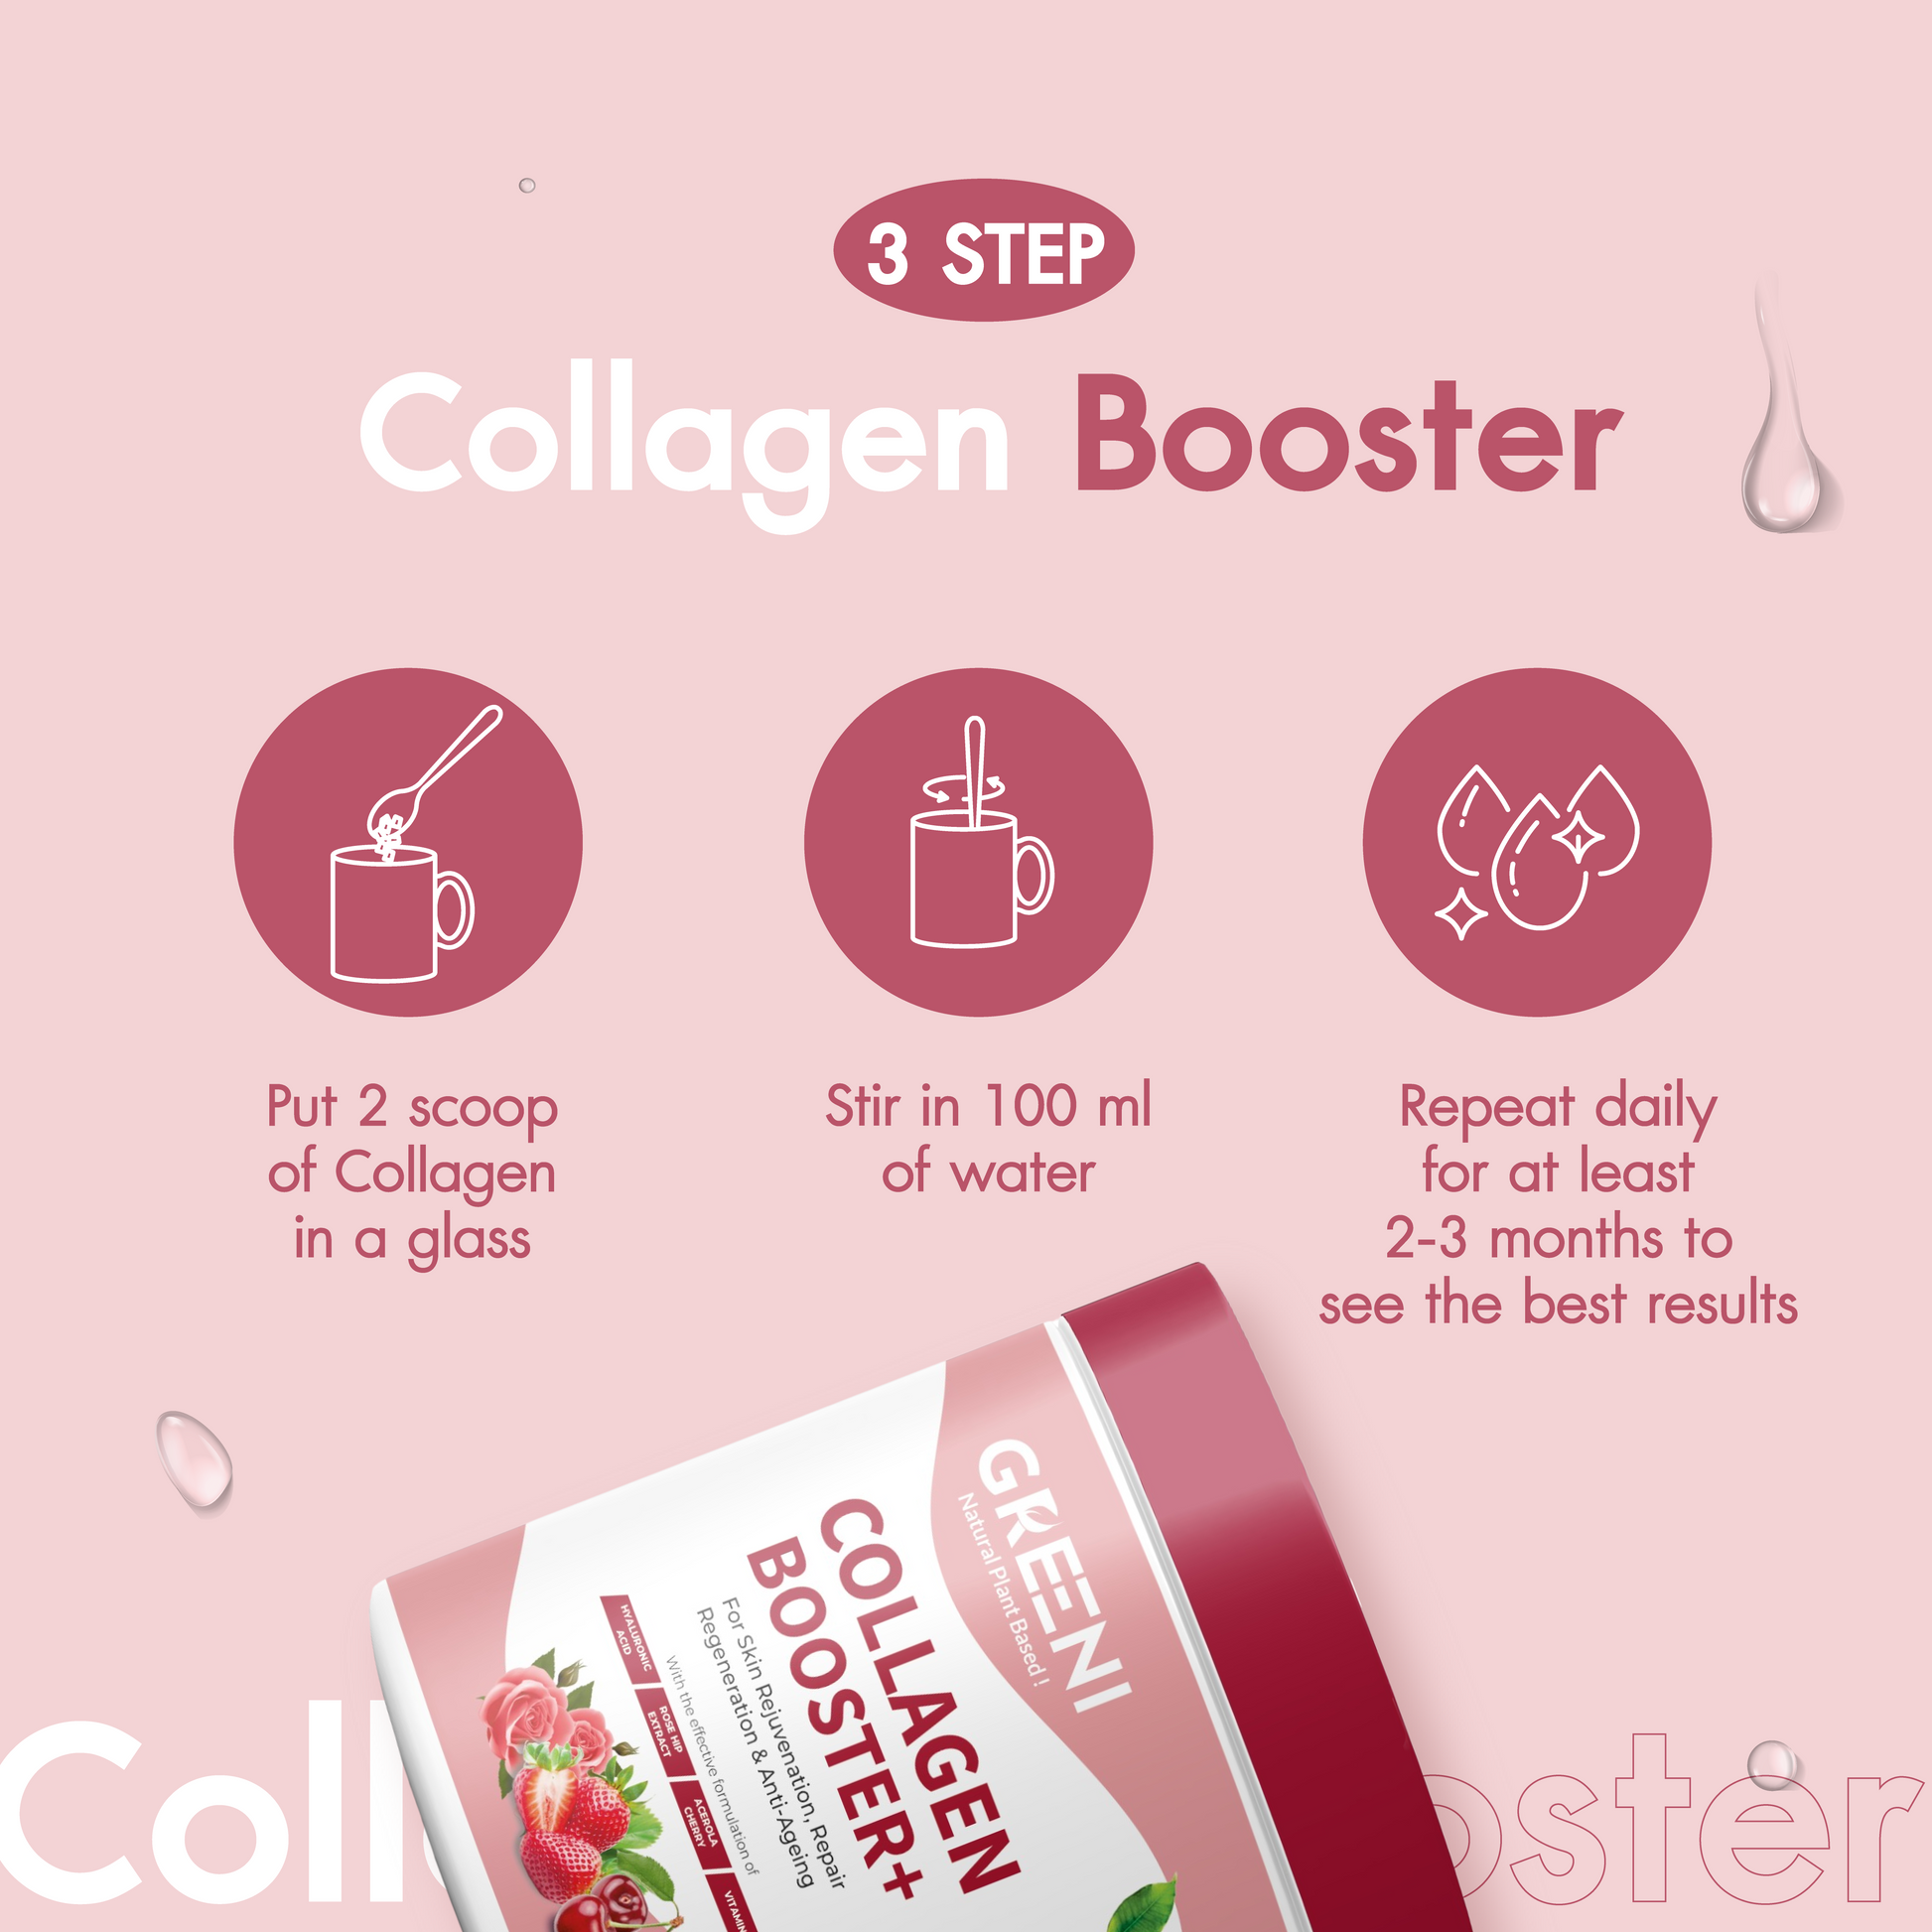 Collagen Booster for Skin Repair & Anti Ageing - GREENI